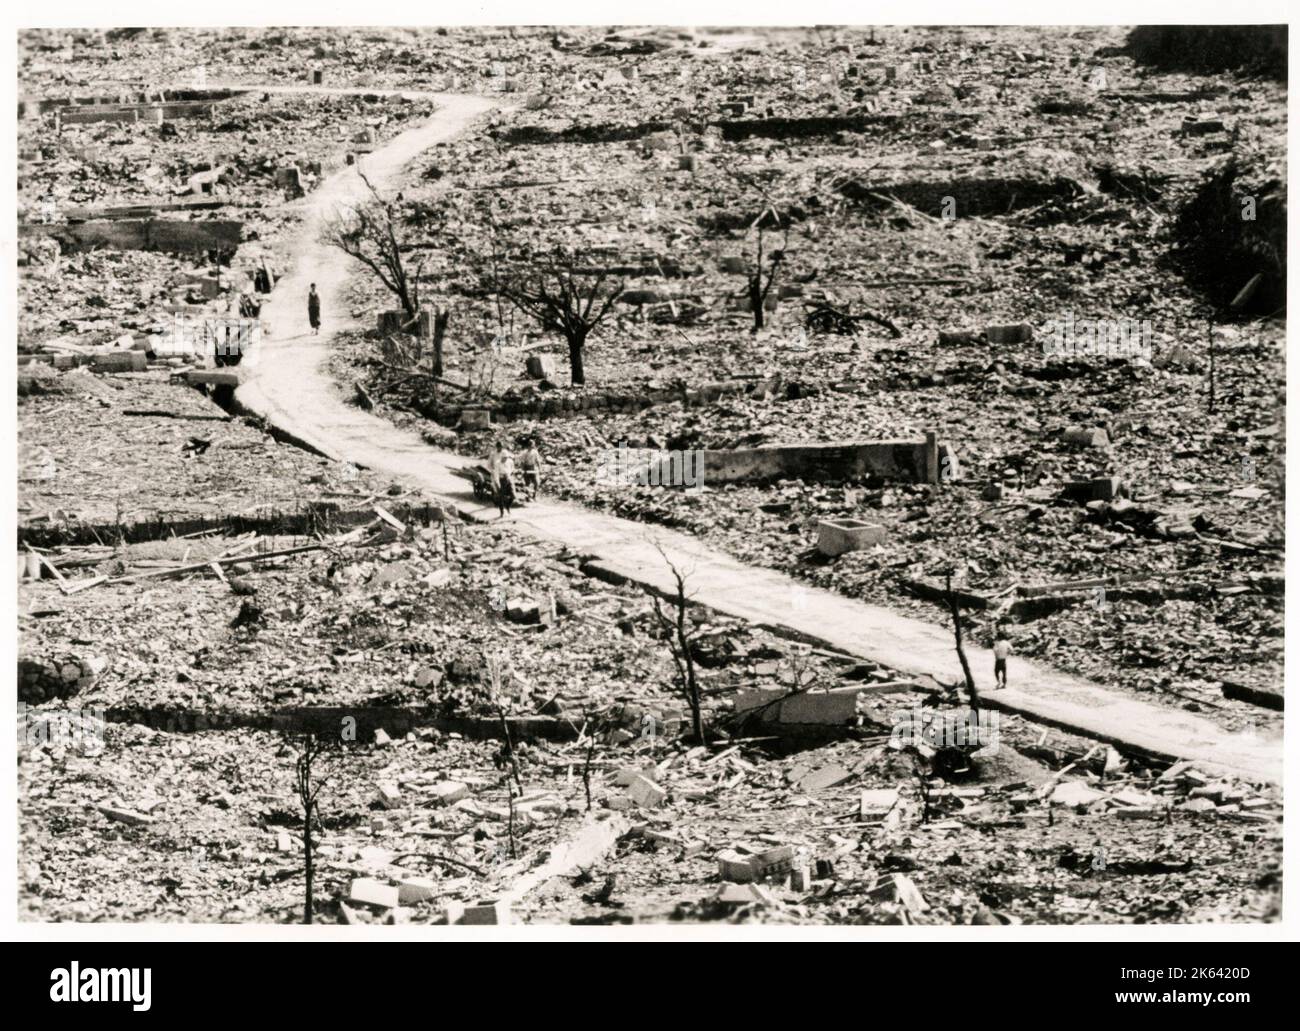 City ruins following nuclear explosion - atom bomb Japan, World War II 1945 Stock Photo